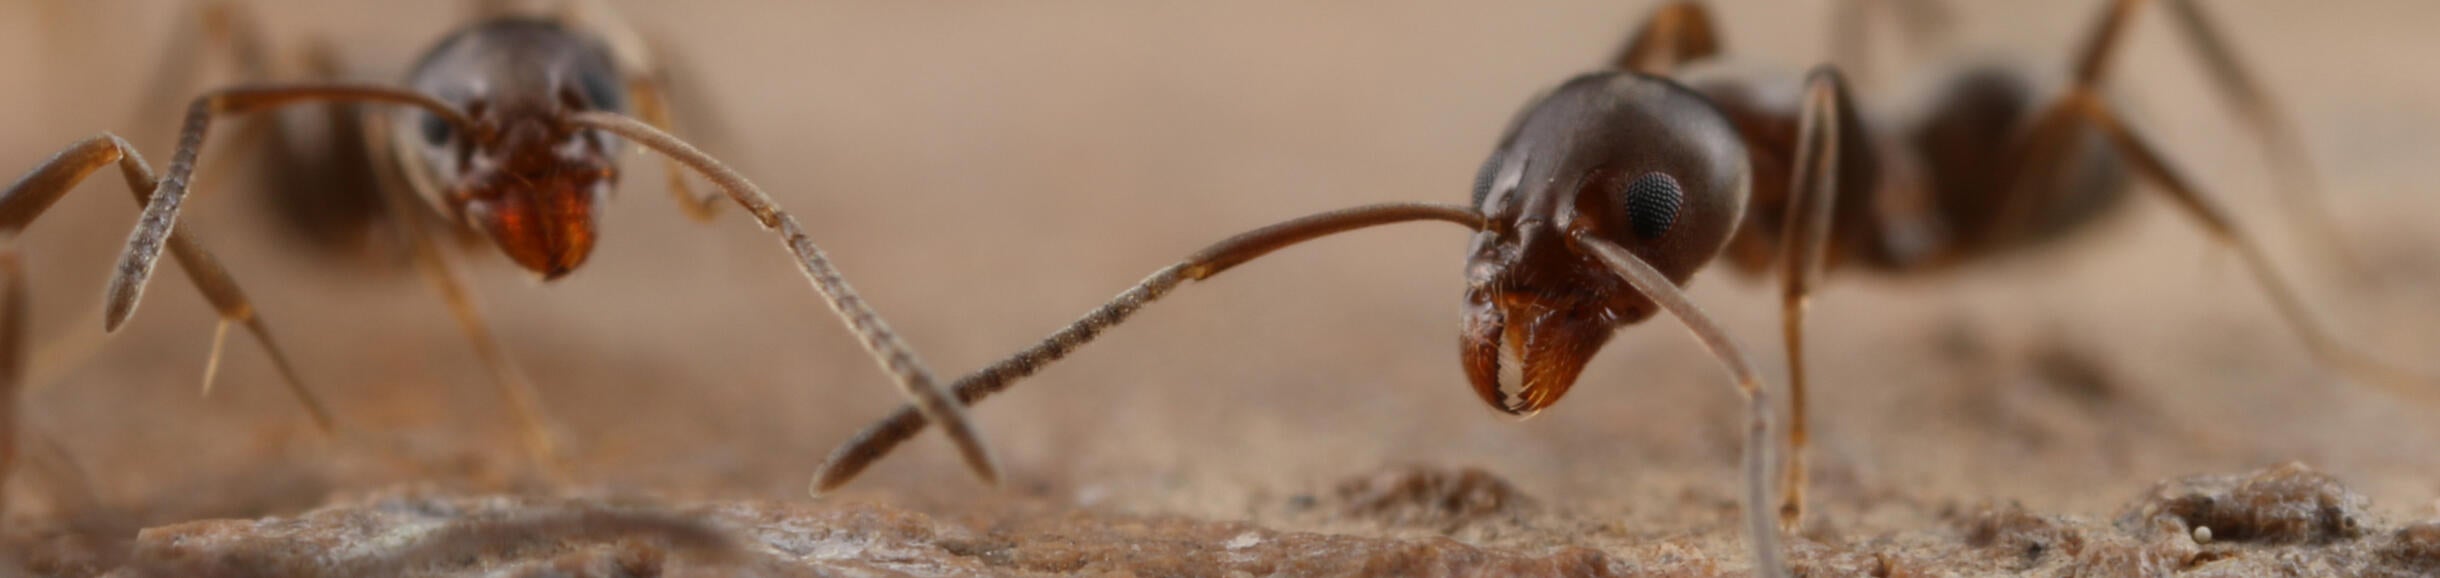 Argentine ants antennating